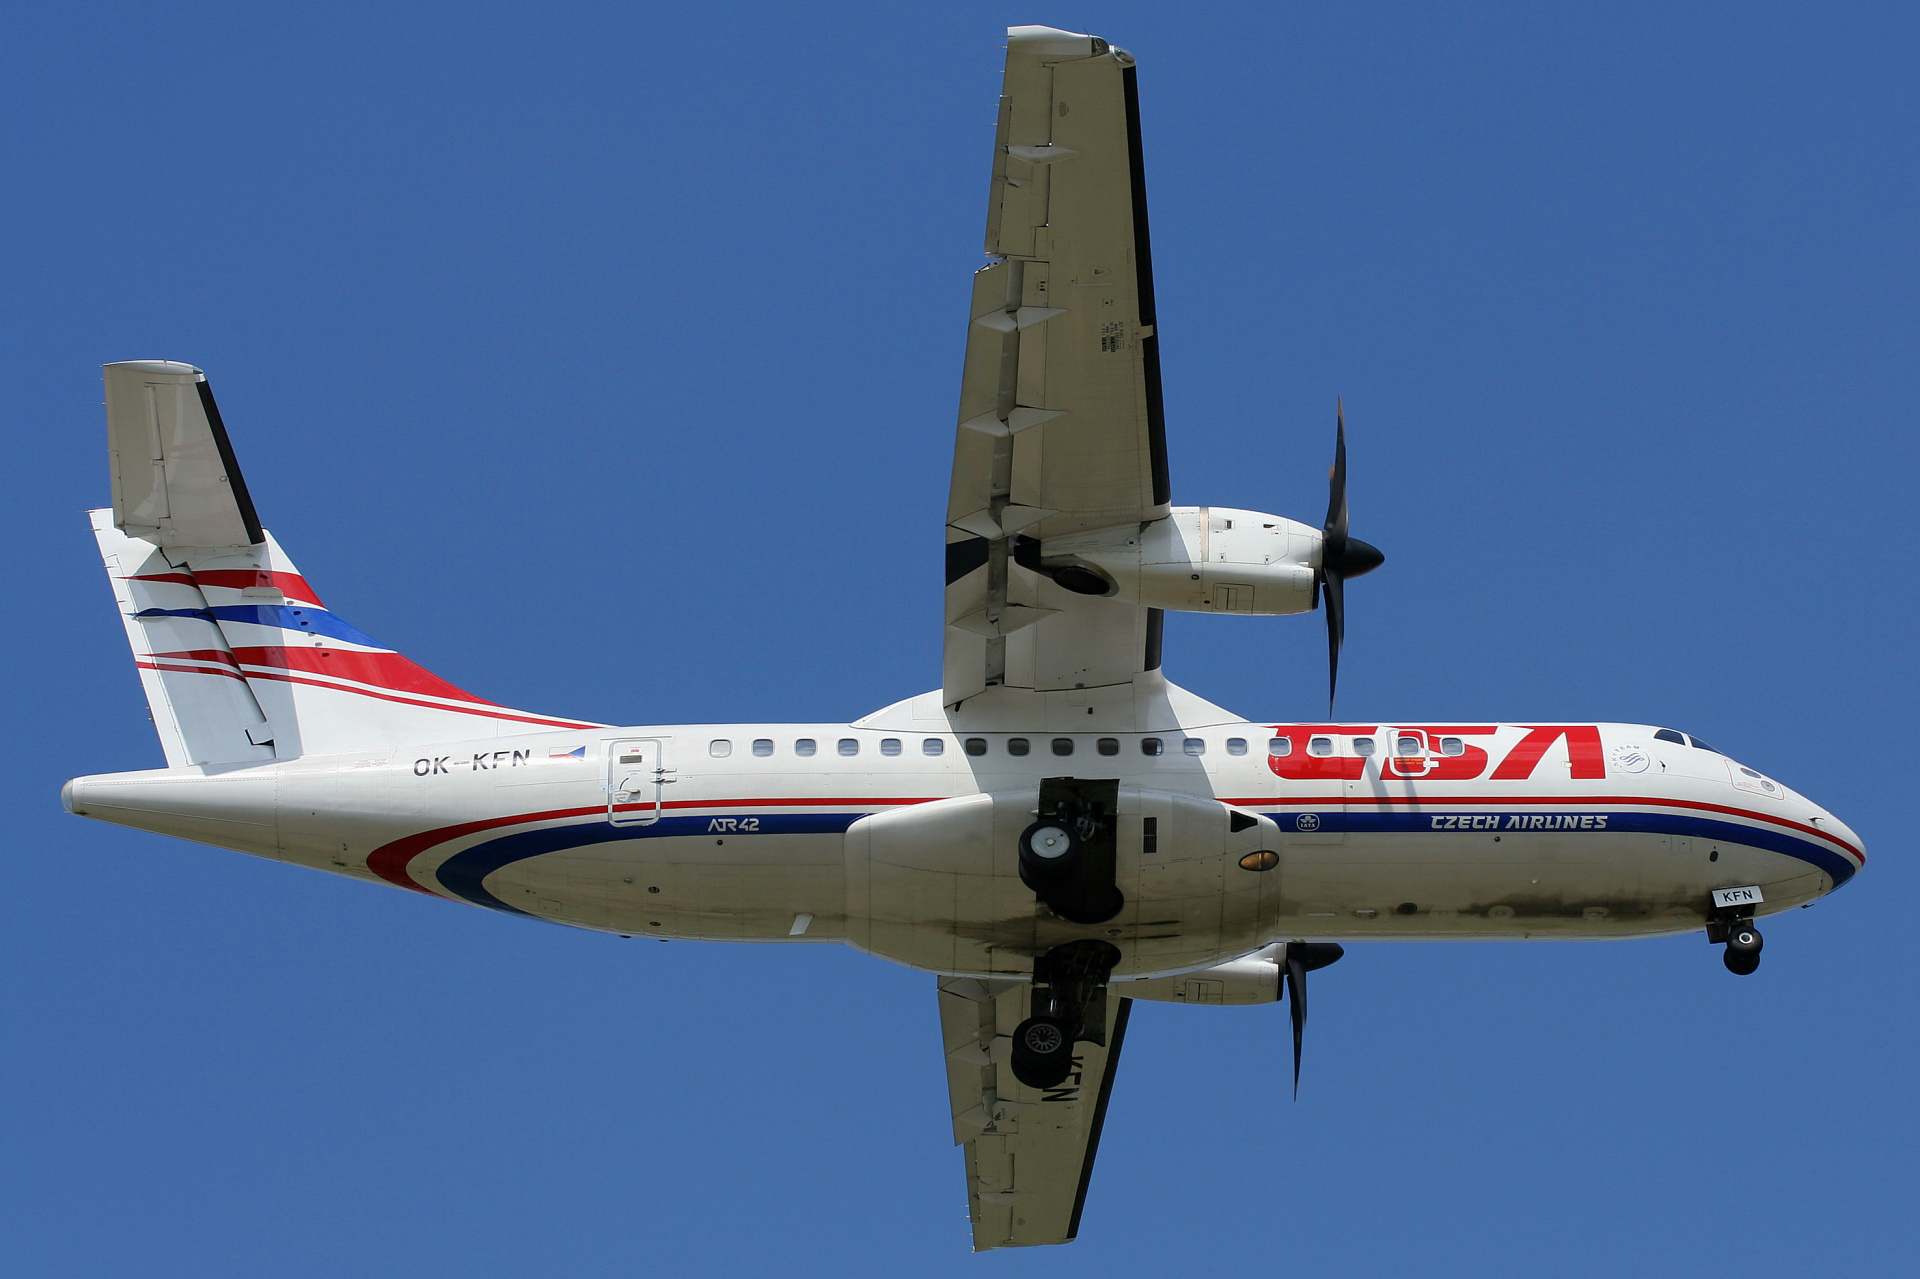 OK-KFN (Aircraft » EPWA Spotting » ATR 42 » CSA Czech Airlines)